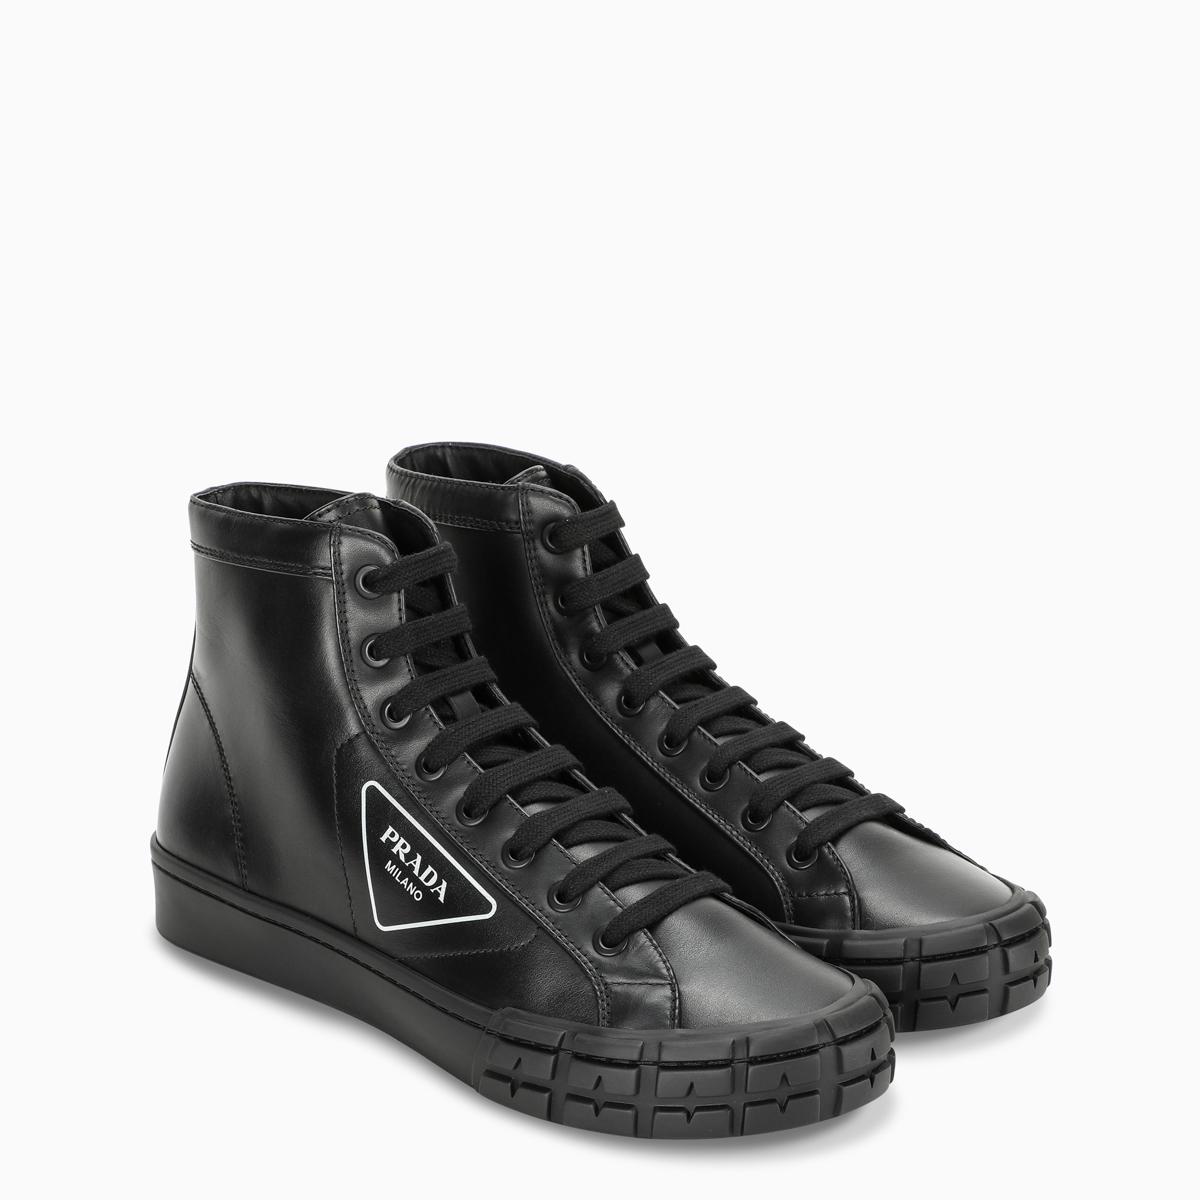 Prada Leather Wheel High-top Sneakers in Black for Men - Lyst